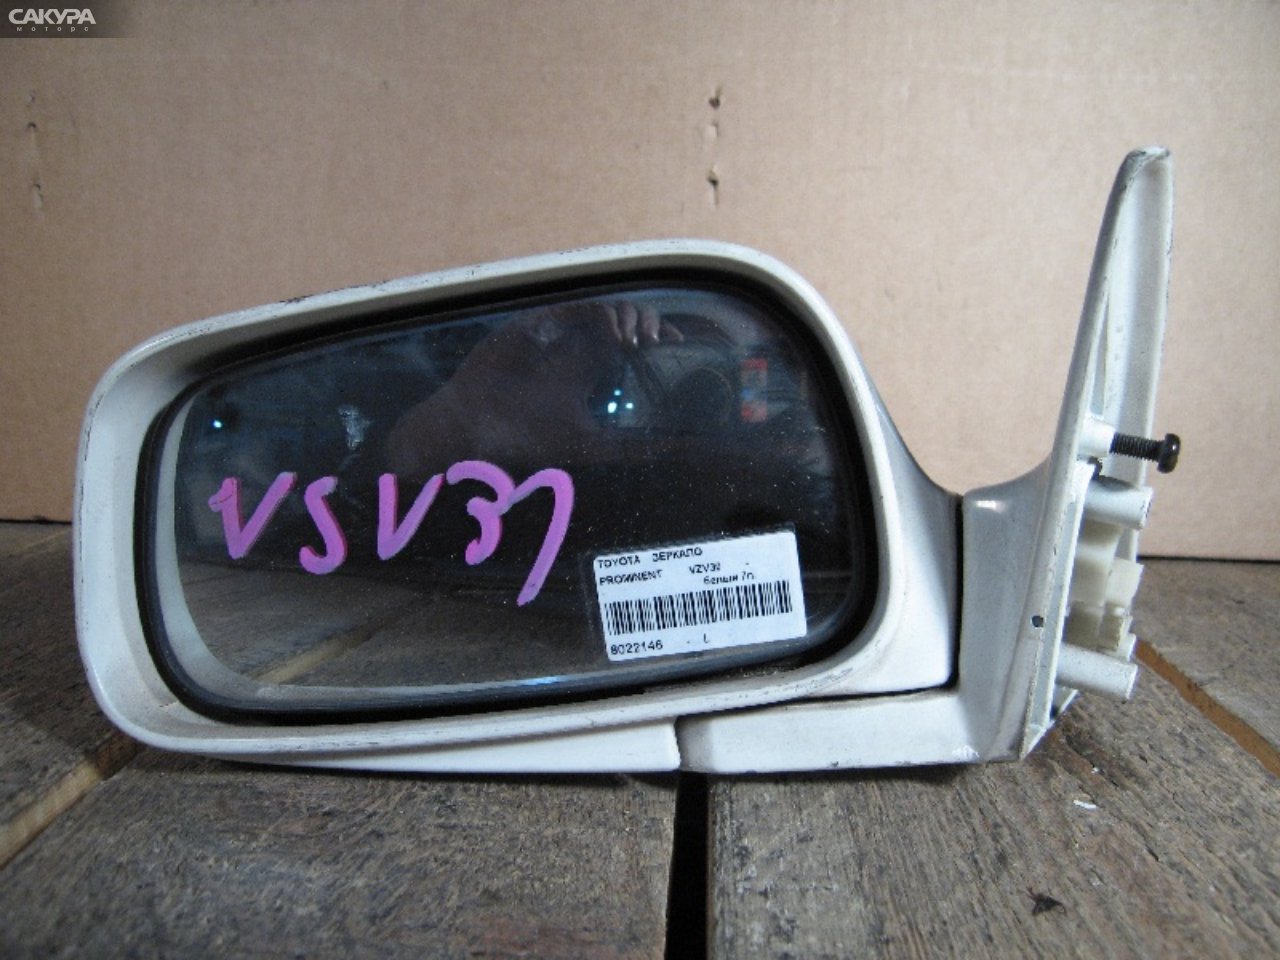 Зеркало боковое левое Toyota Camry Prominent VZV30: купить в Сакура Абакан.